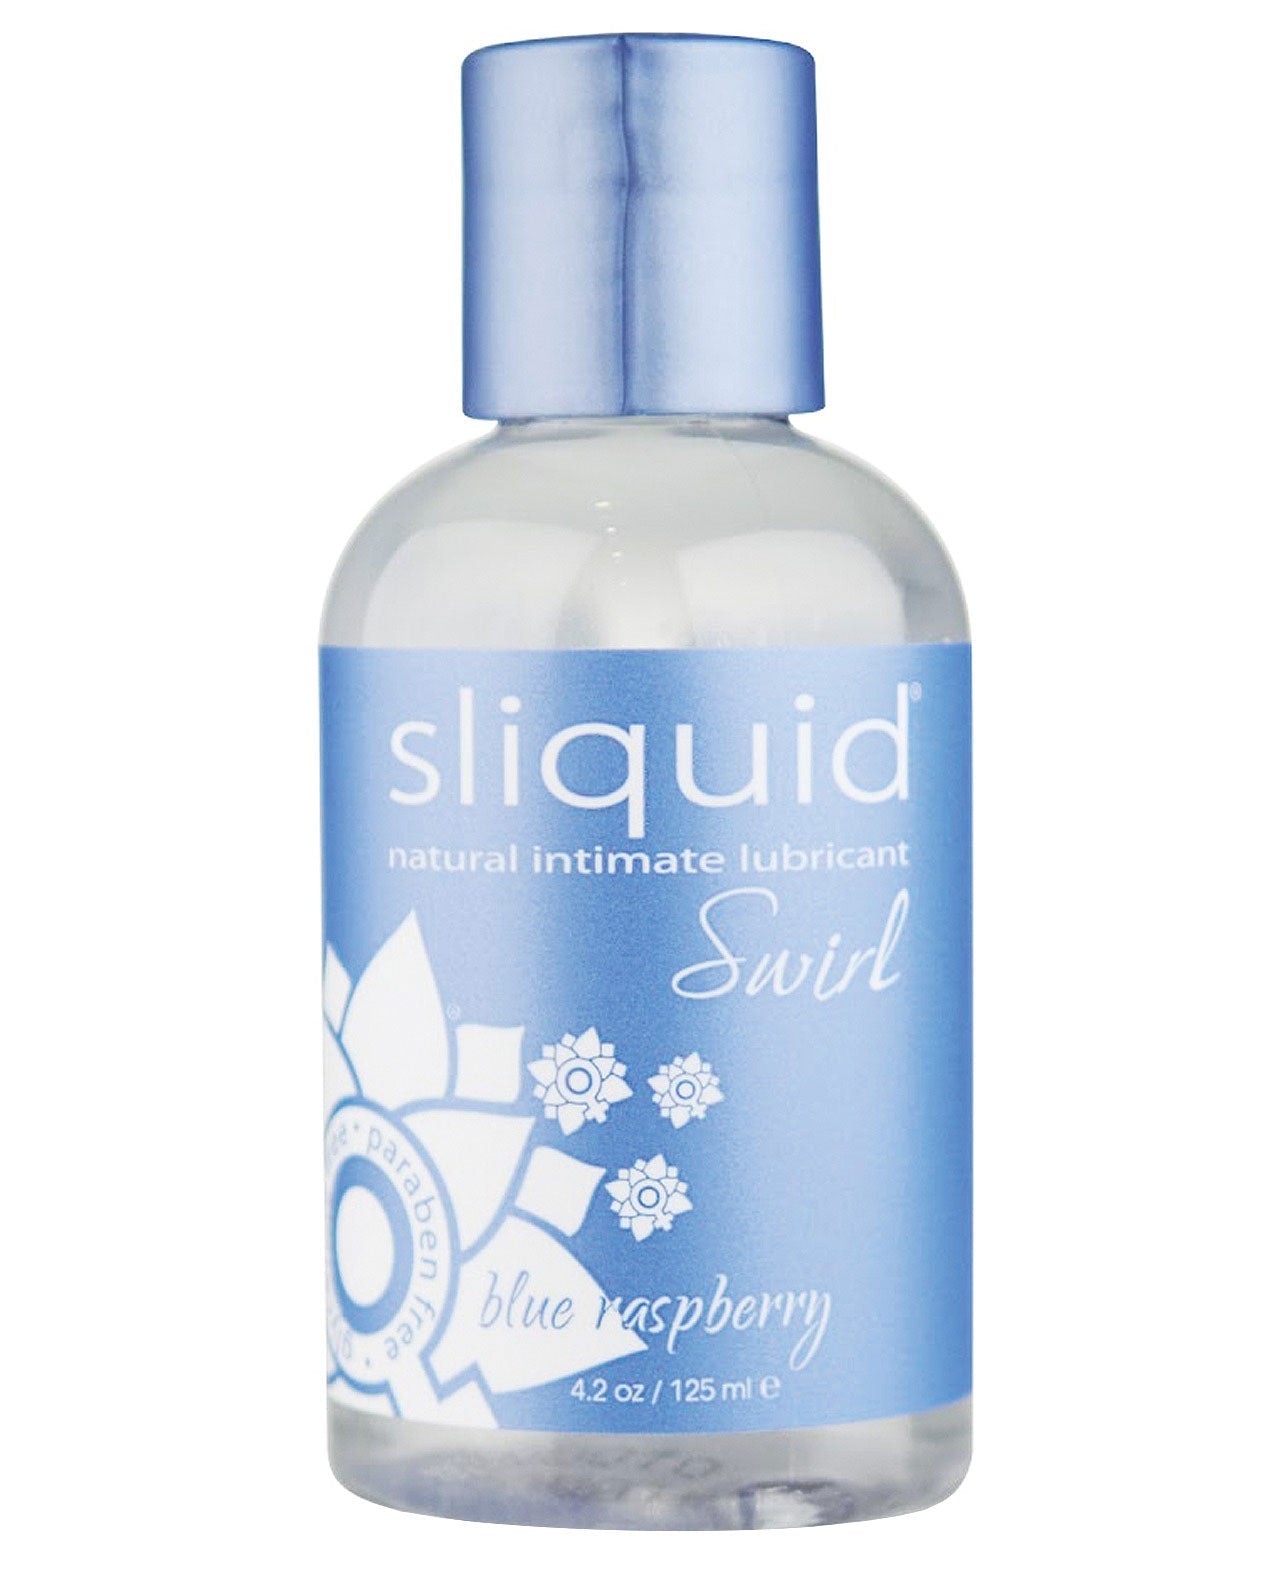 Sliquid Naturals Swirl Lubricant - 4.2 oz Blue Raspberry